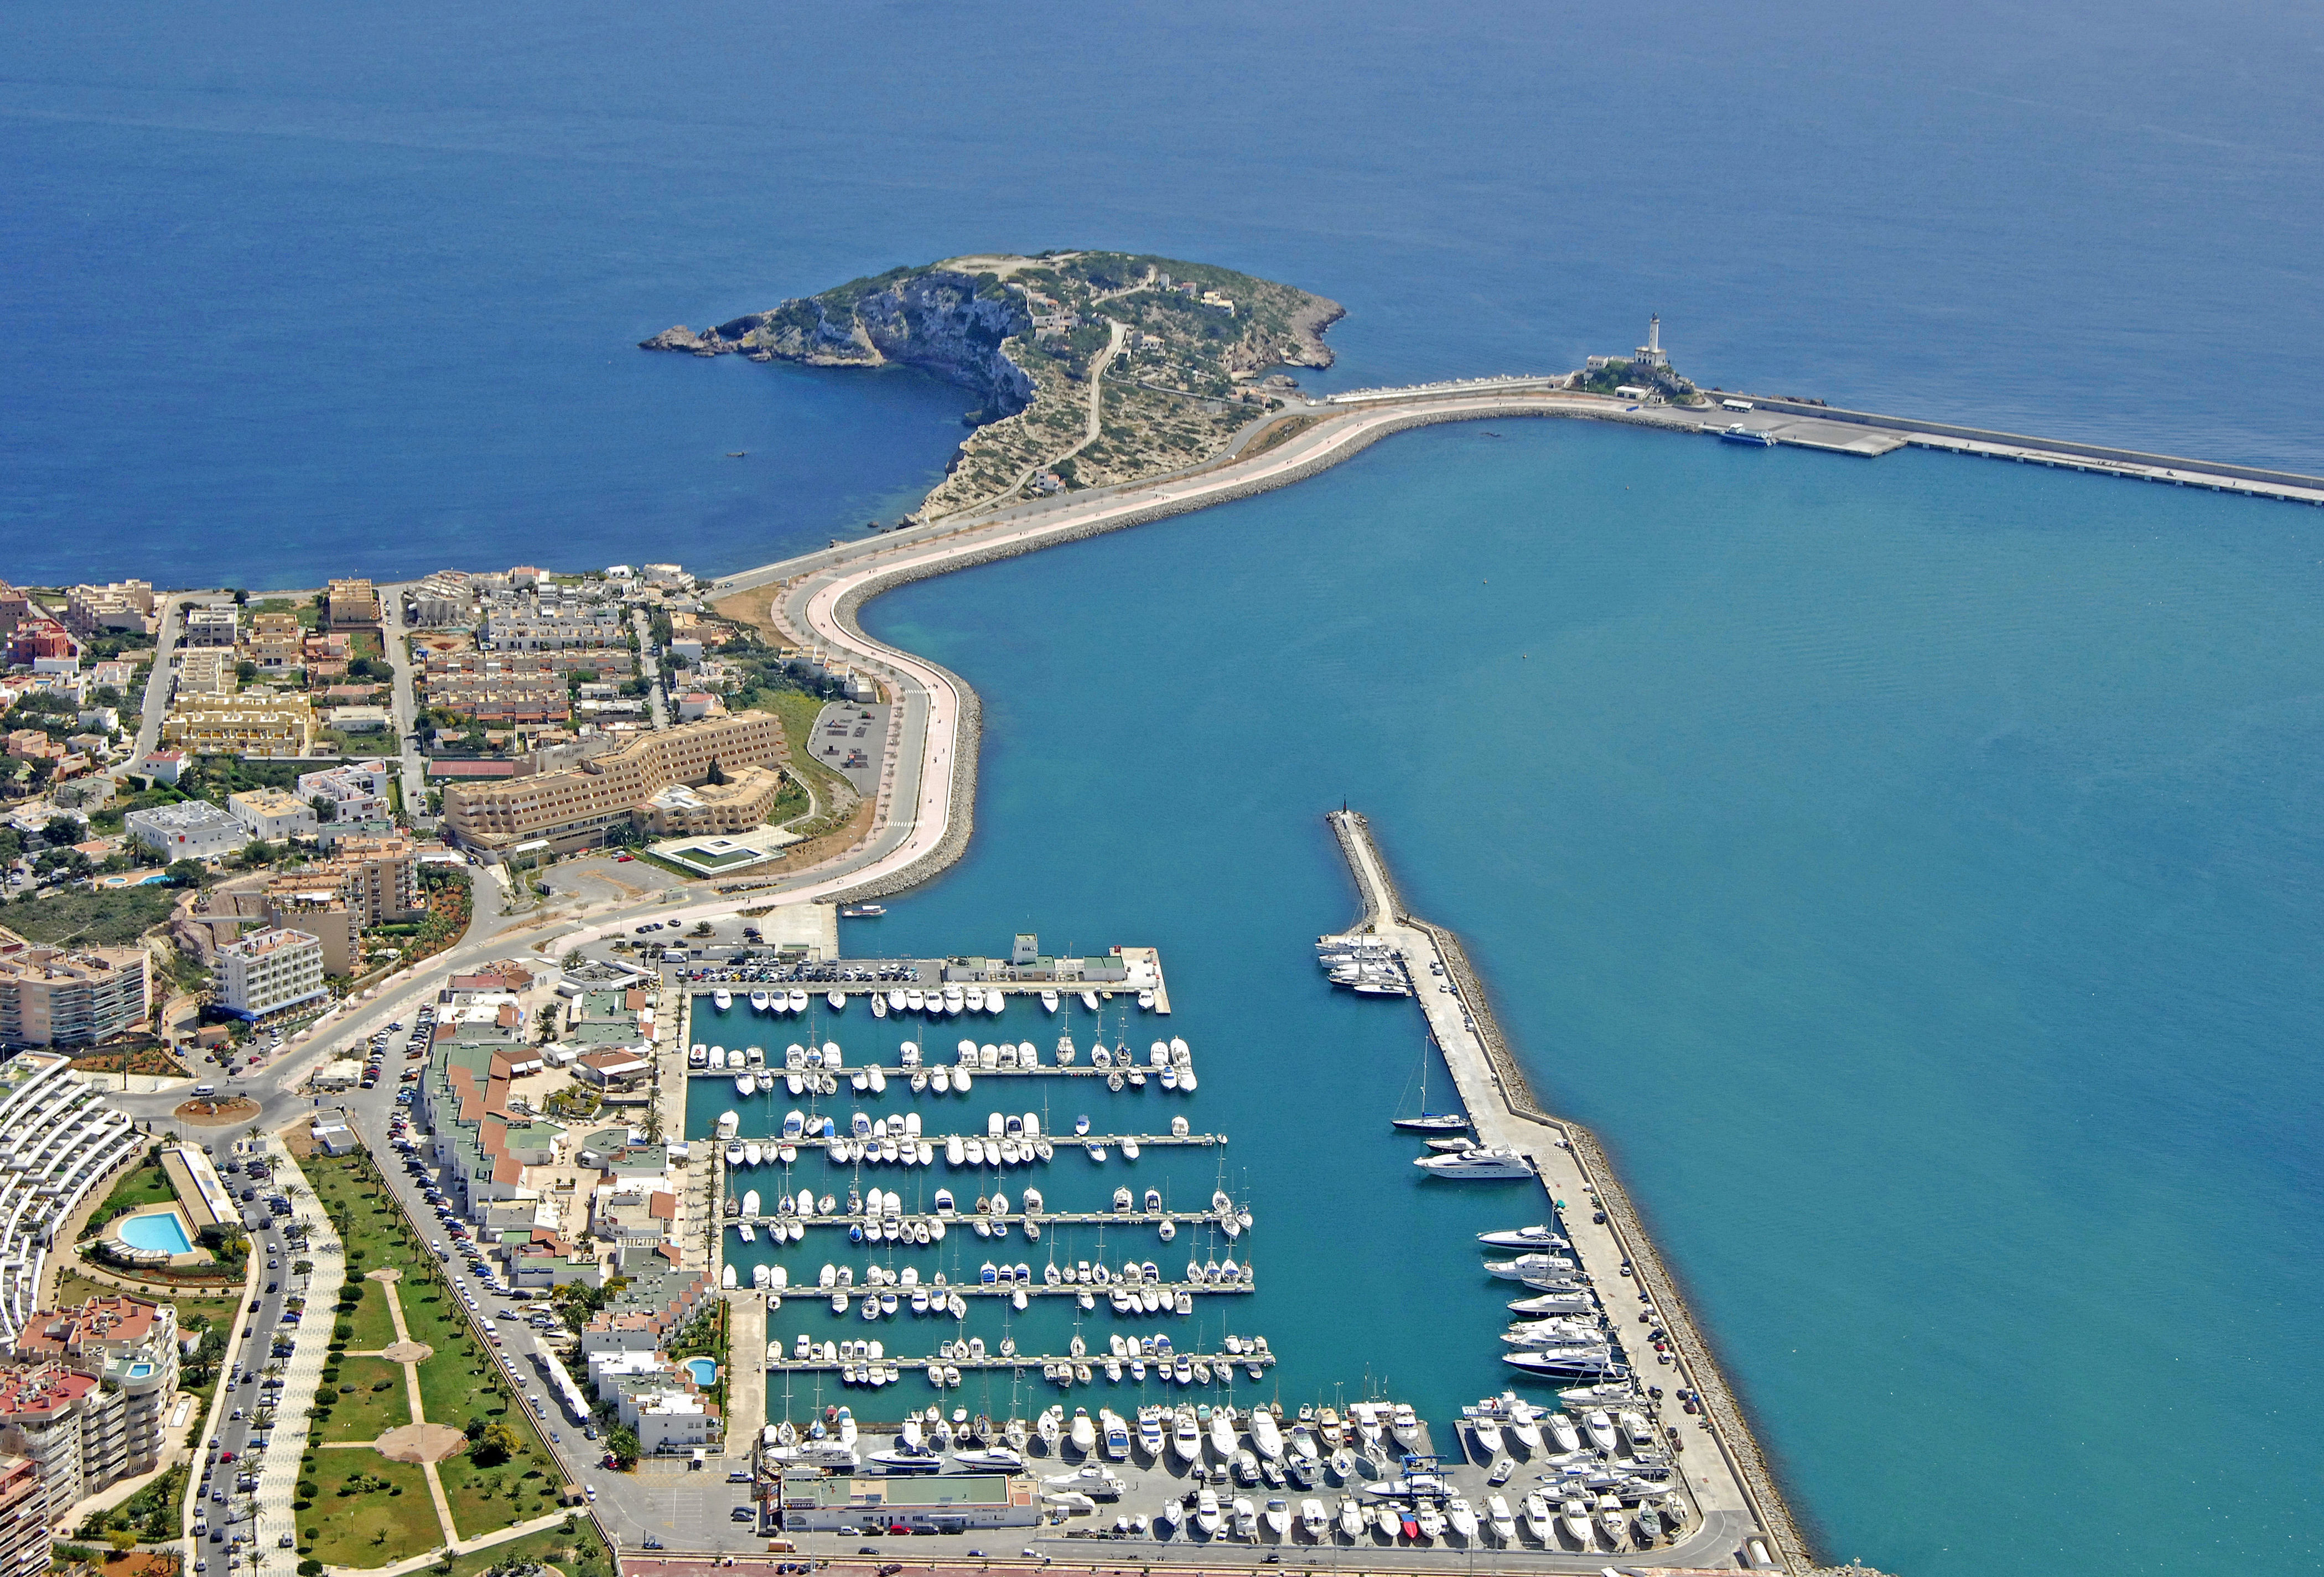 Botafoc Ibiza in Spain, Europe | Yachting - Rated 3.8